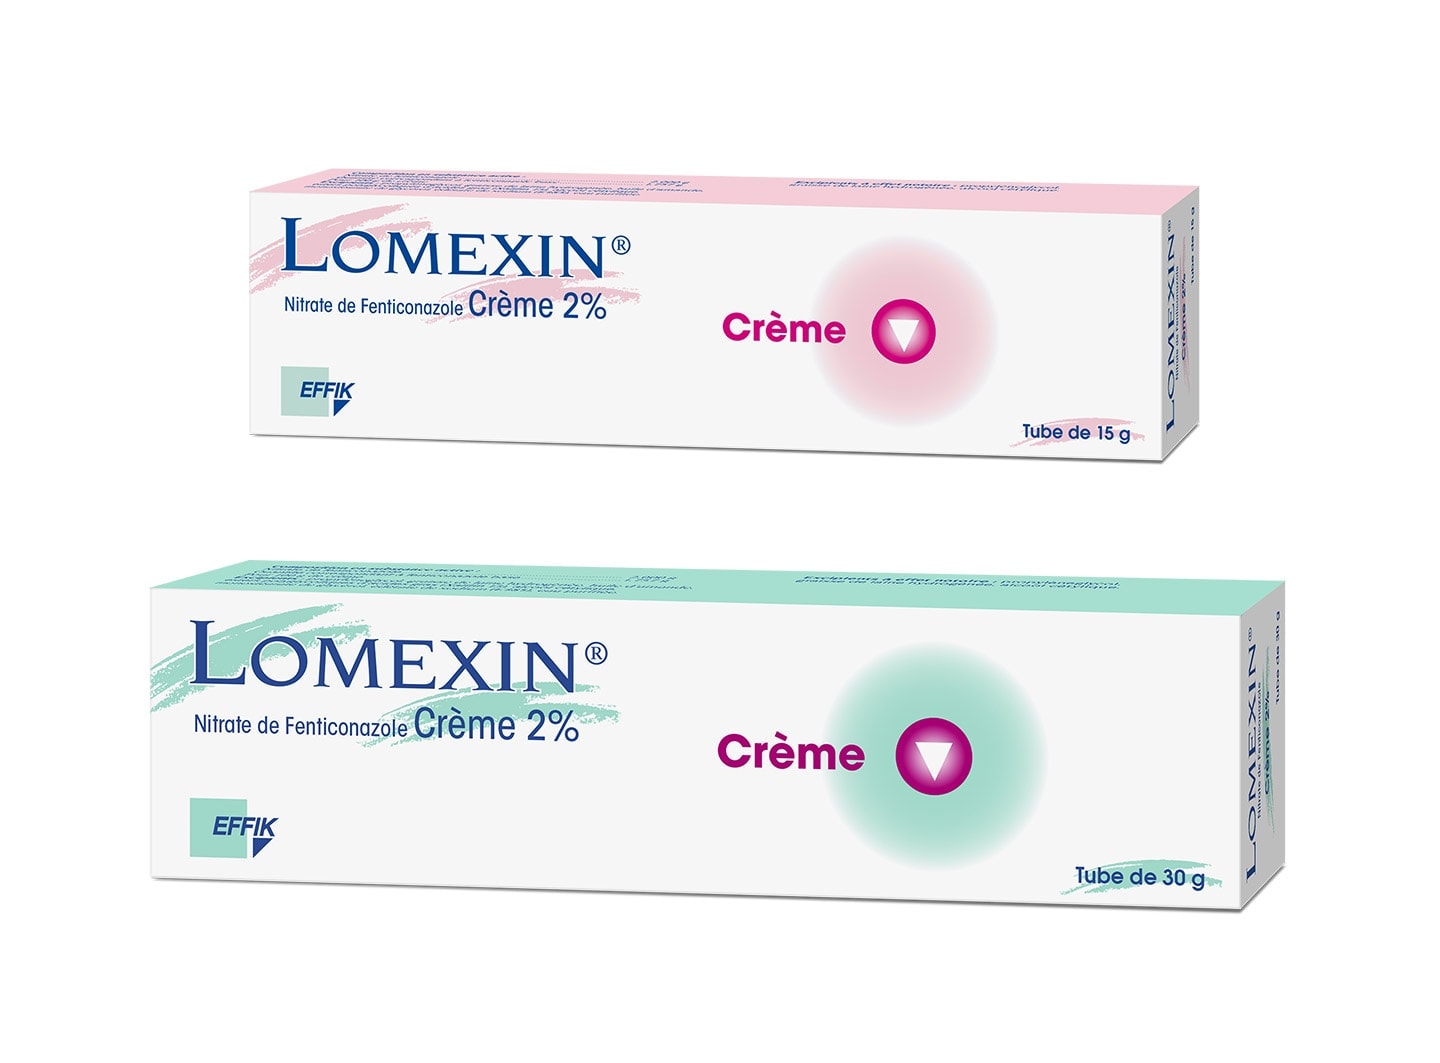 Lomexin crème packs